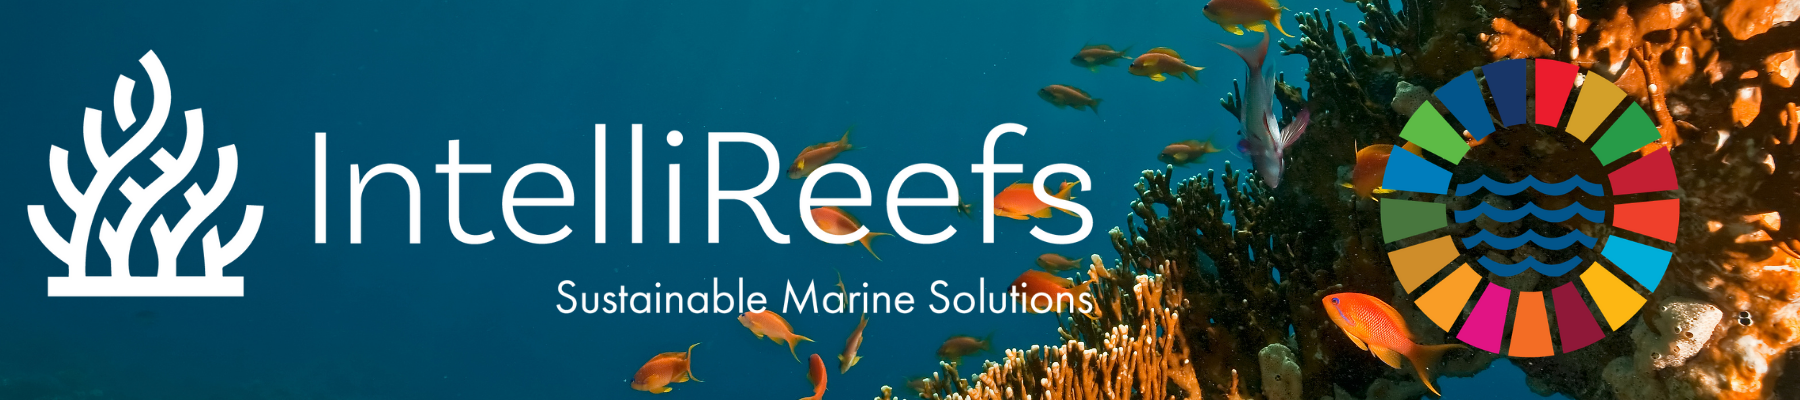 Reef Life Foundation IntelliReefs Biomimicking Coral Habitats